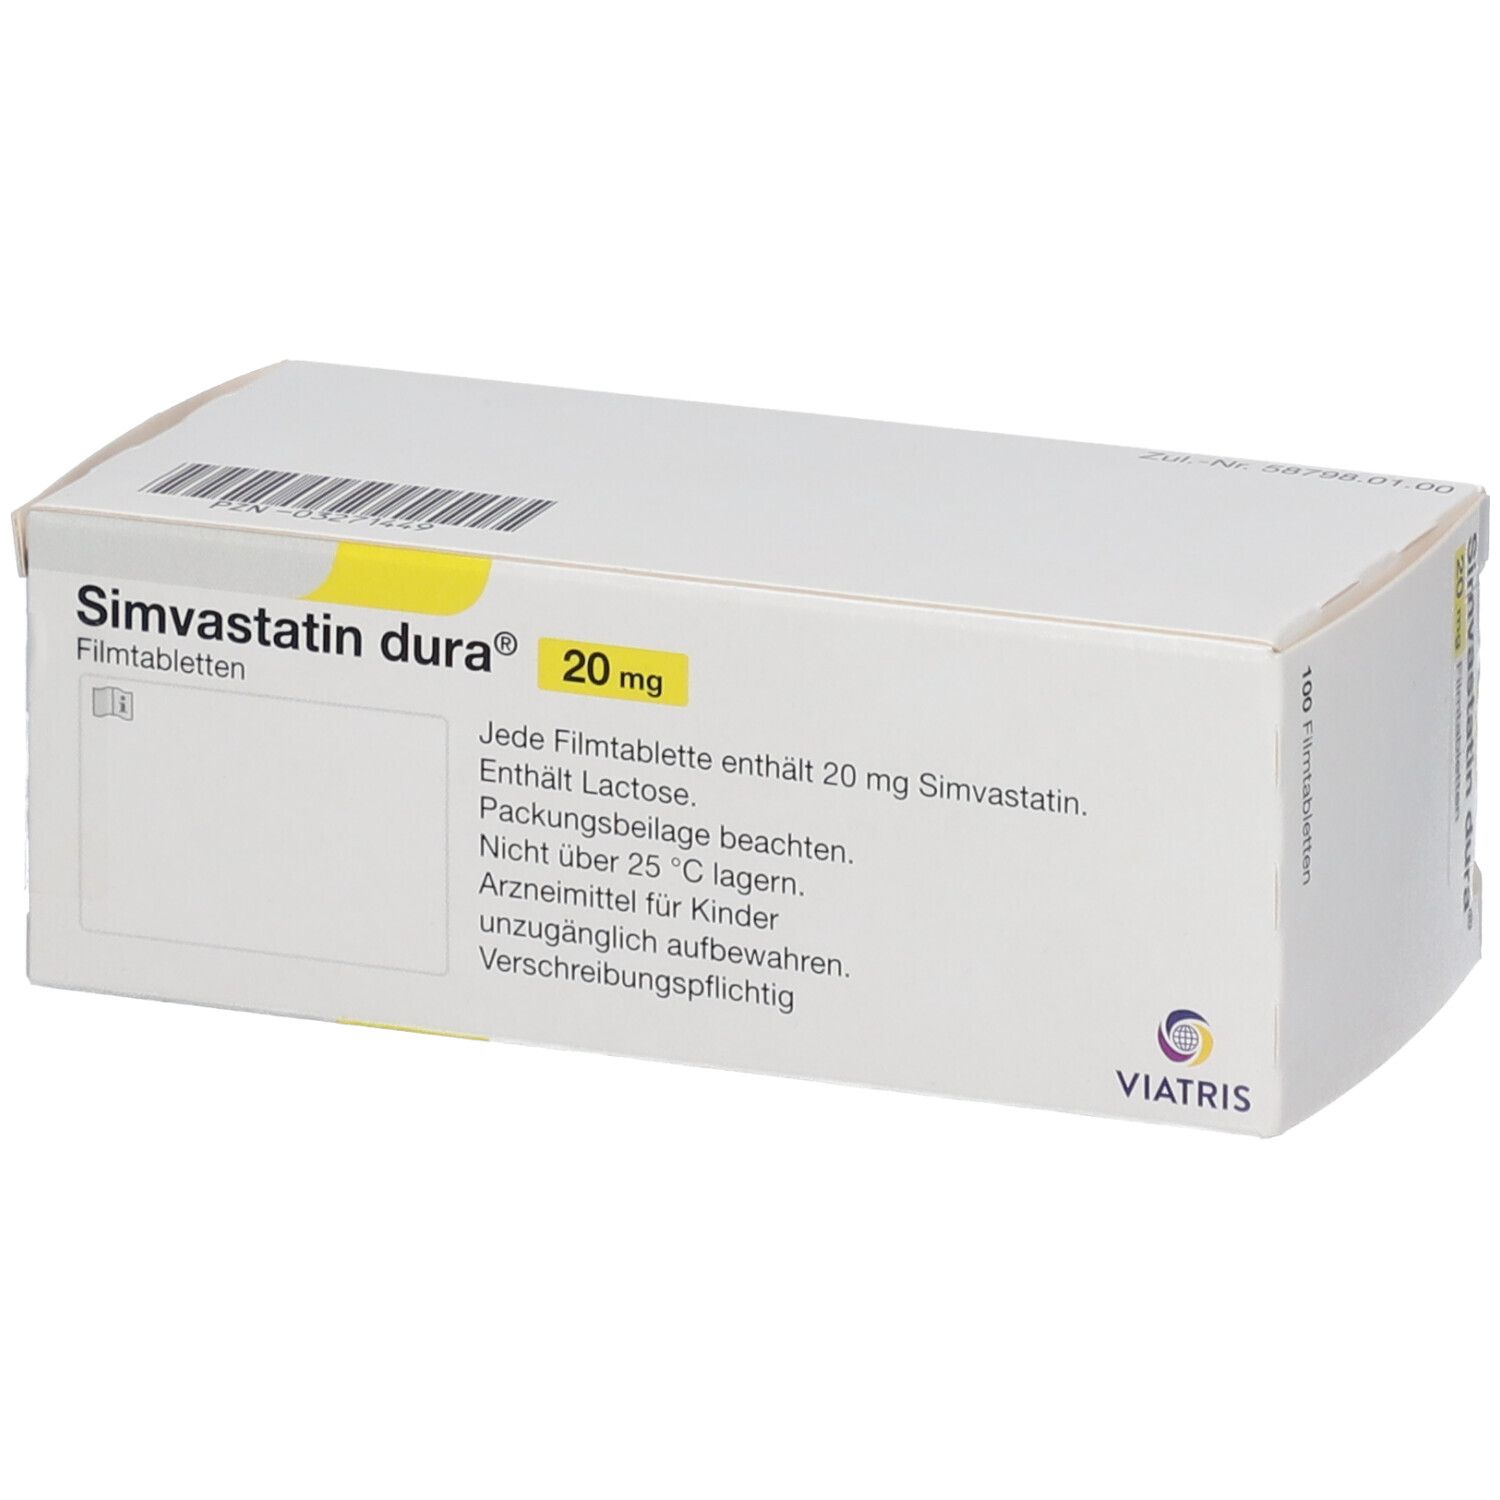 Simvastatin dura® 20 mg